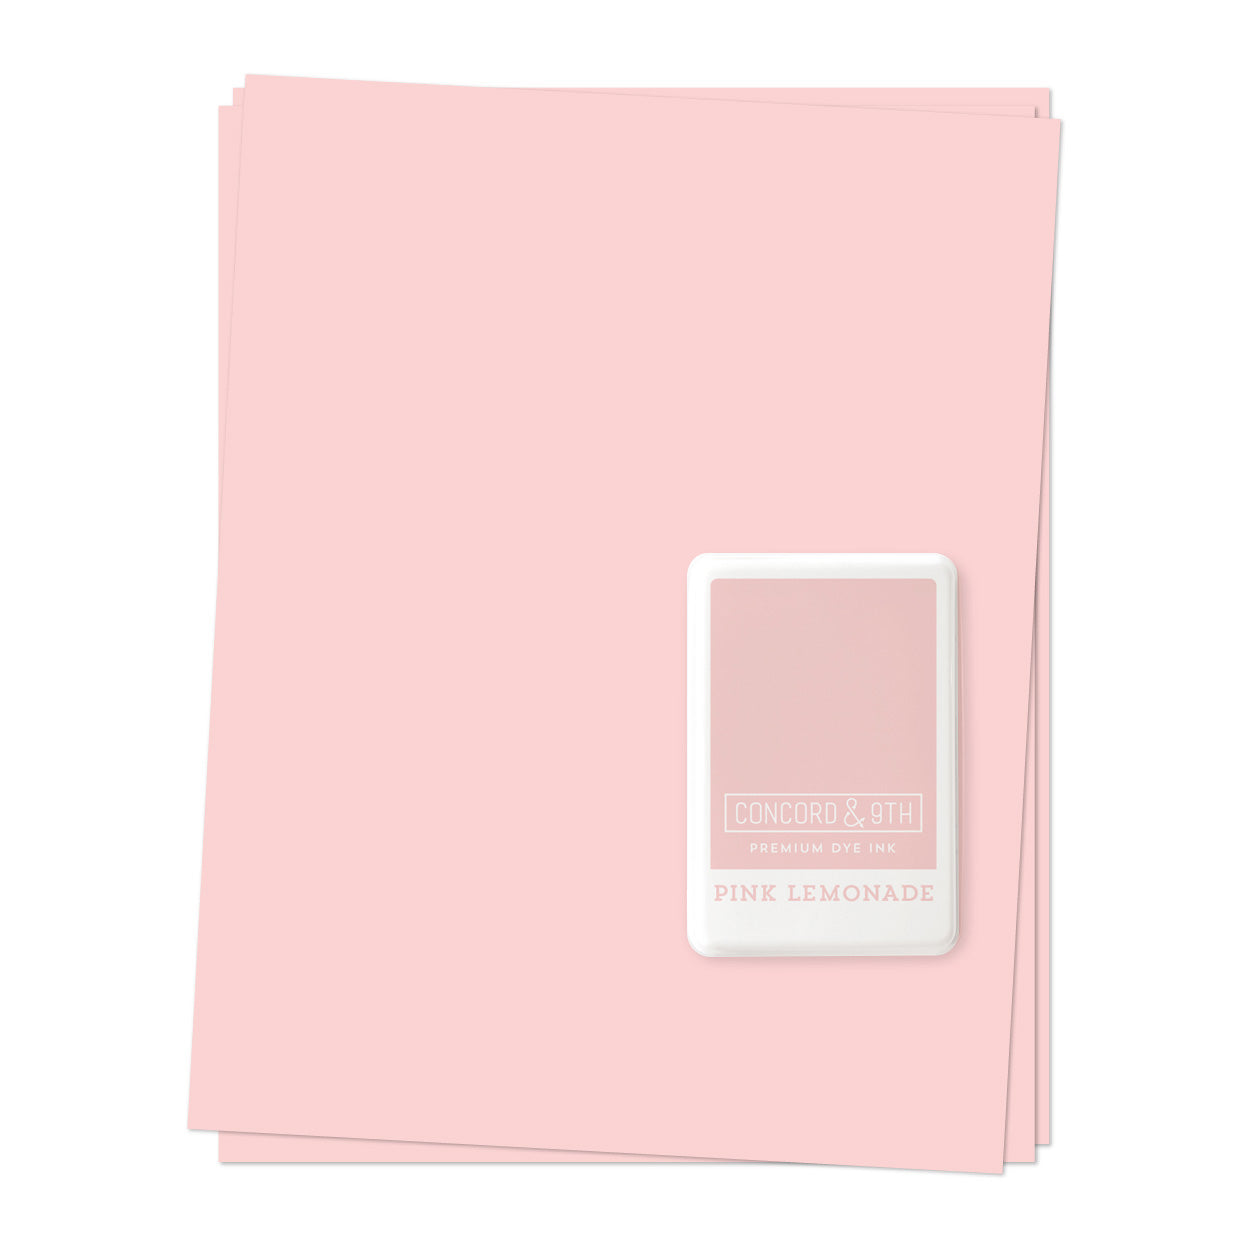 Cardstock: Pink Lemonade Ink Pad & Cardstock BUNDLE - Concord & 9th